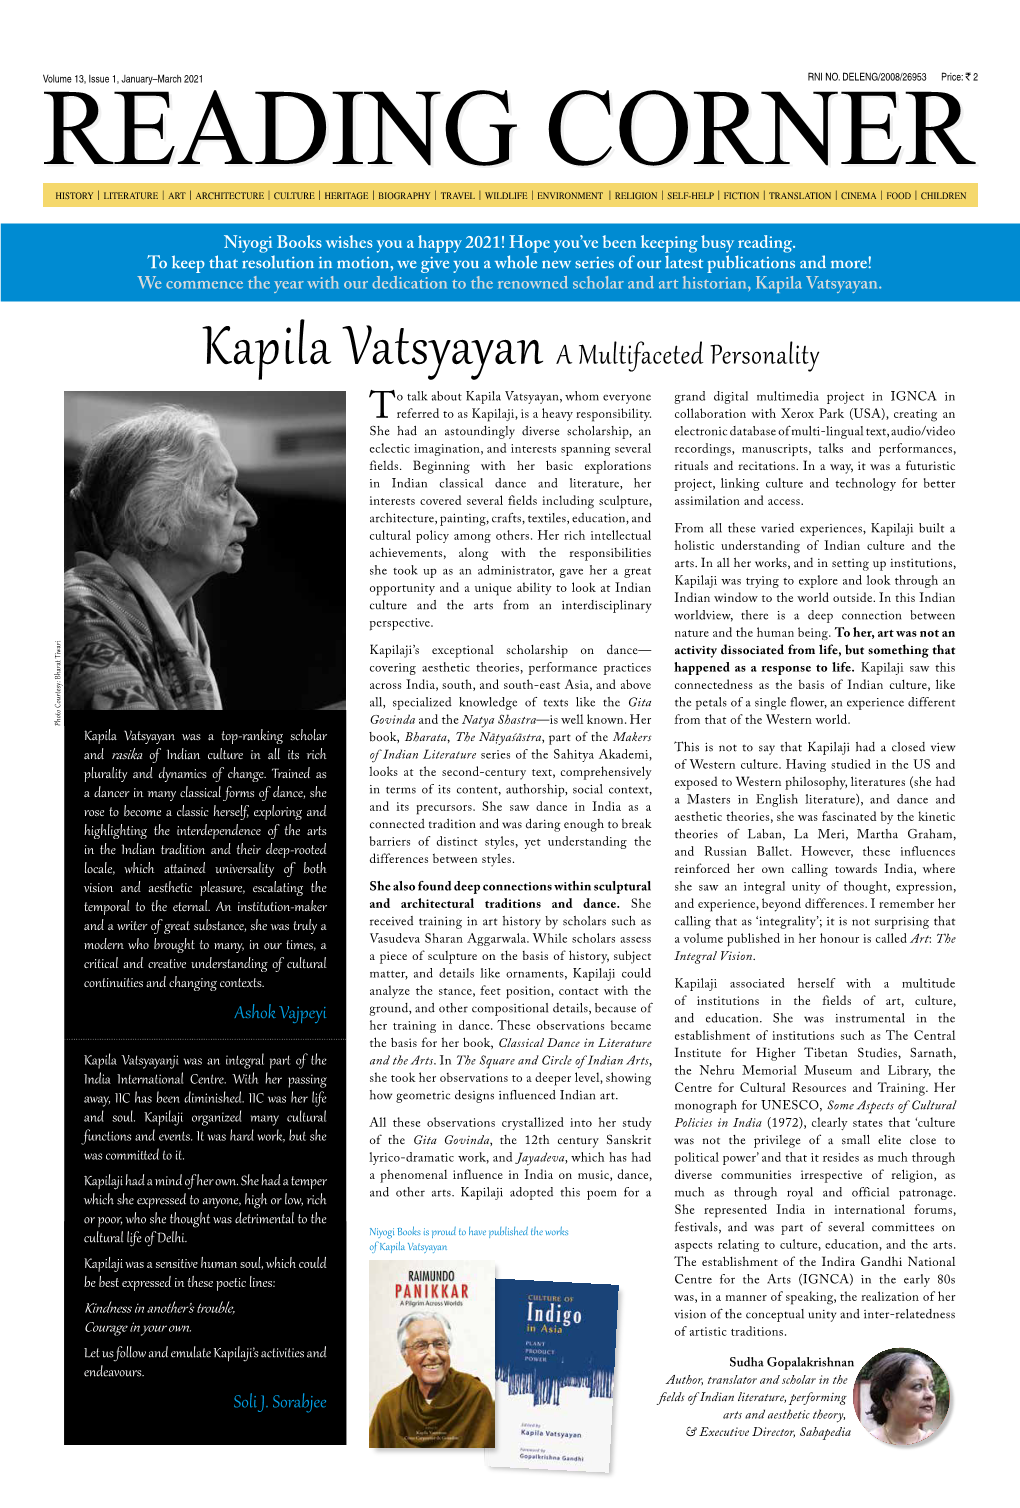 Kapila Vatsyayan a Multifaceted Personality